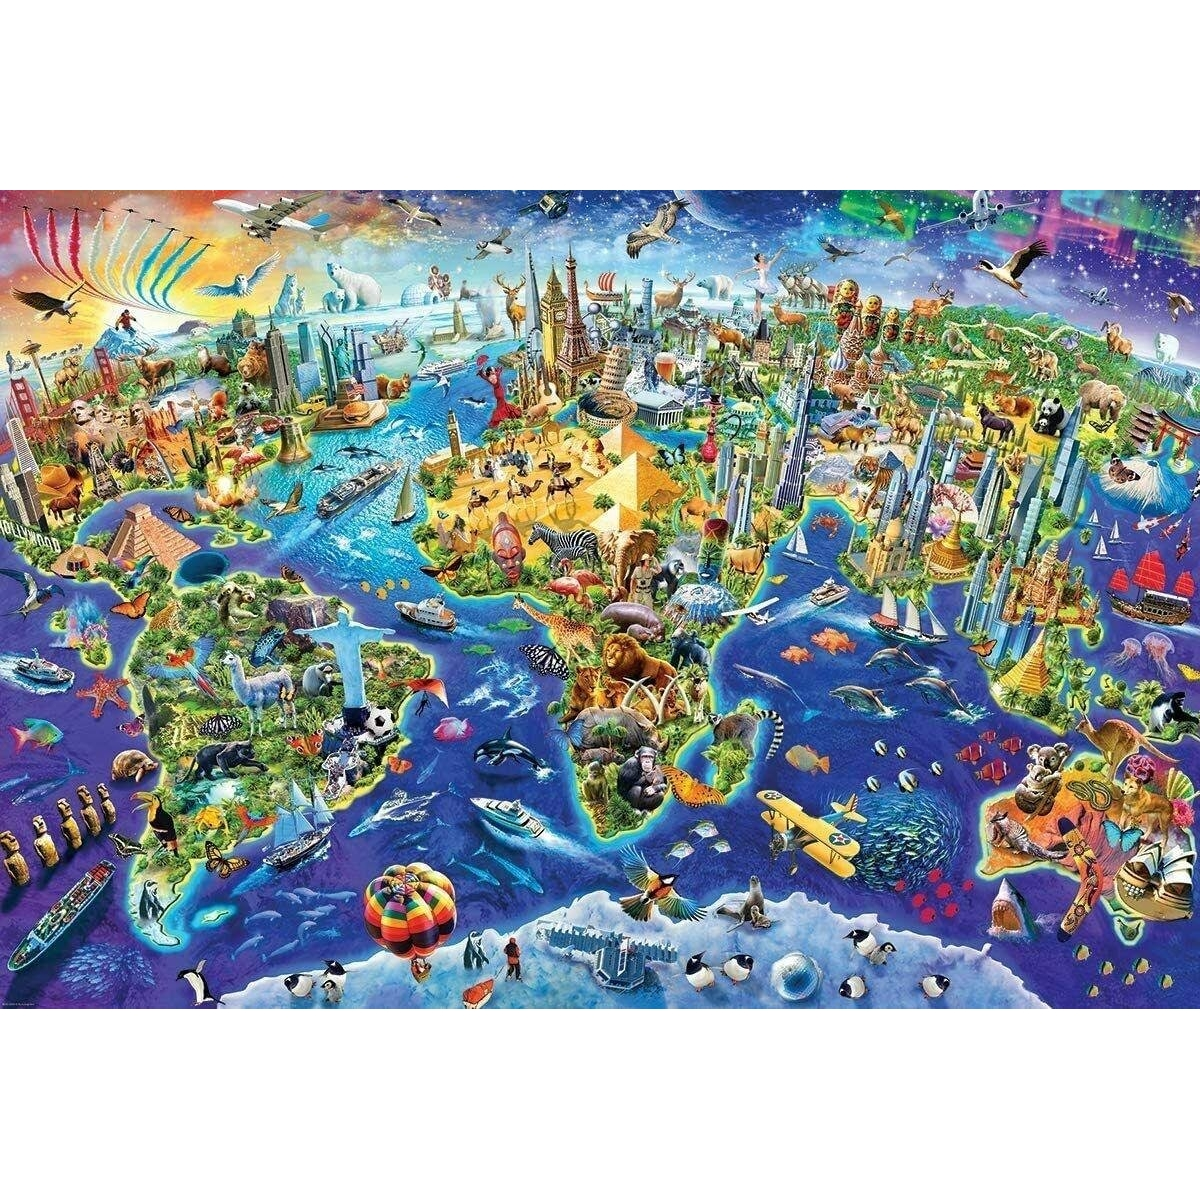 EUROGRAPHICS puzzle Crazy World Puzzle - 2000 Teile